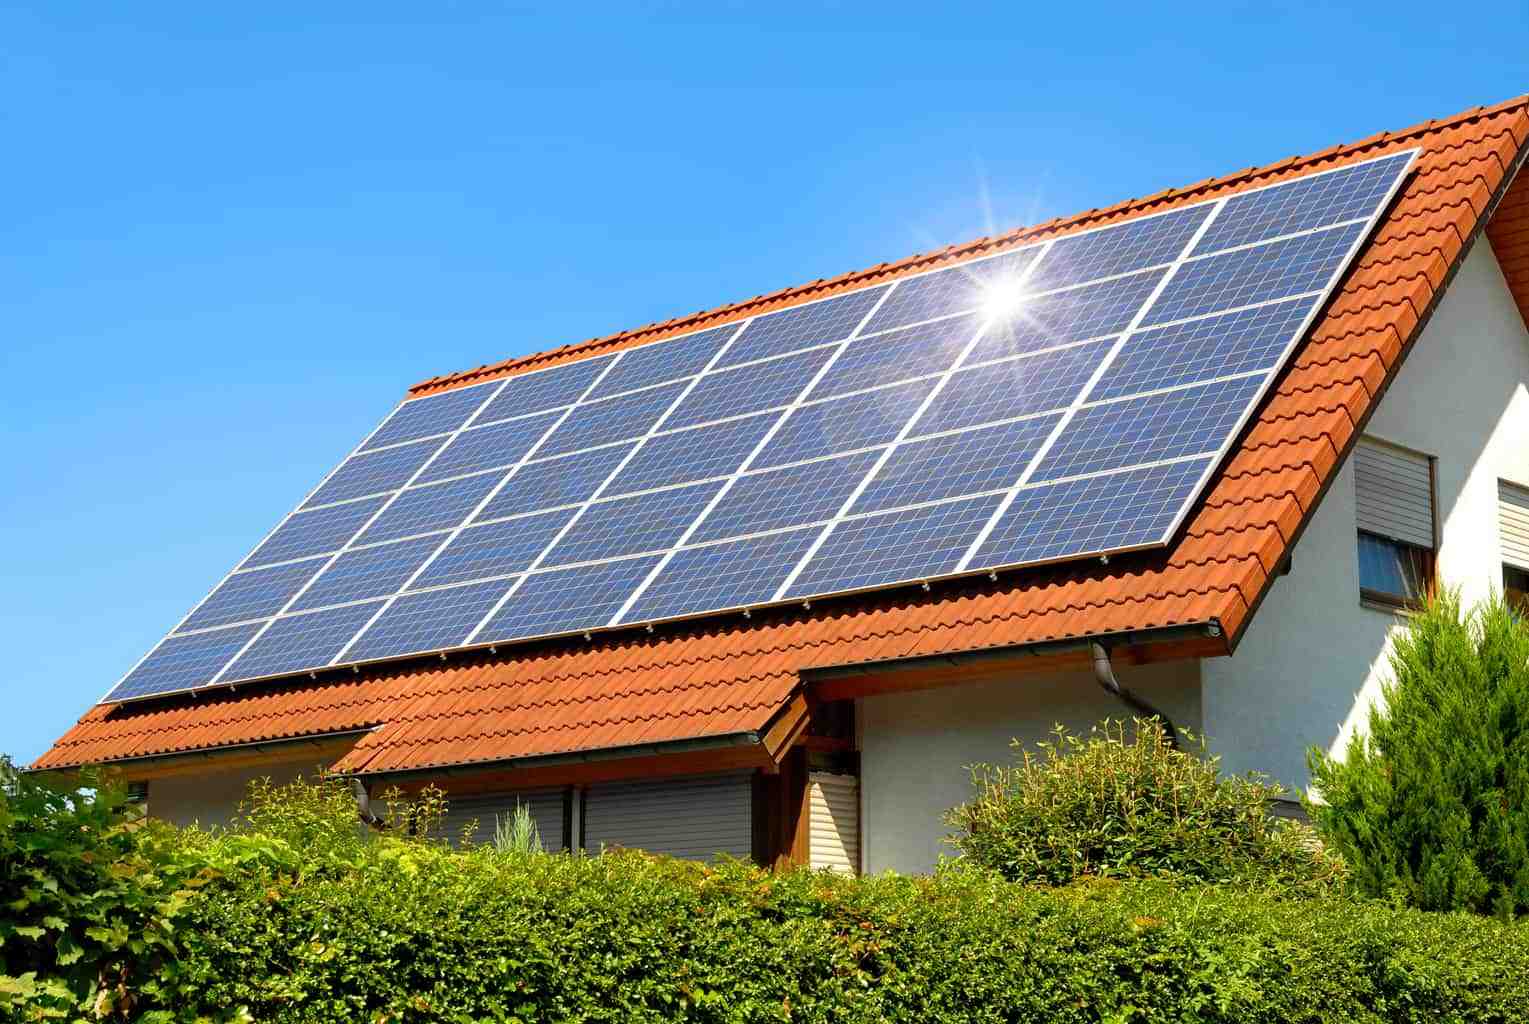 Are solar panels useless?